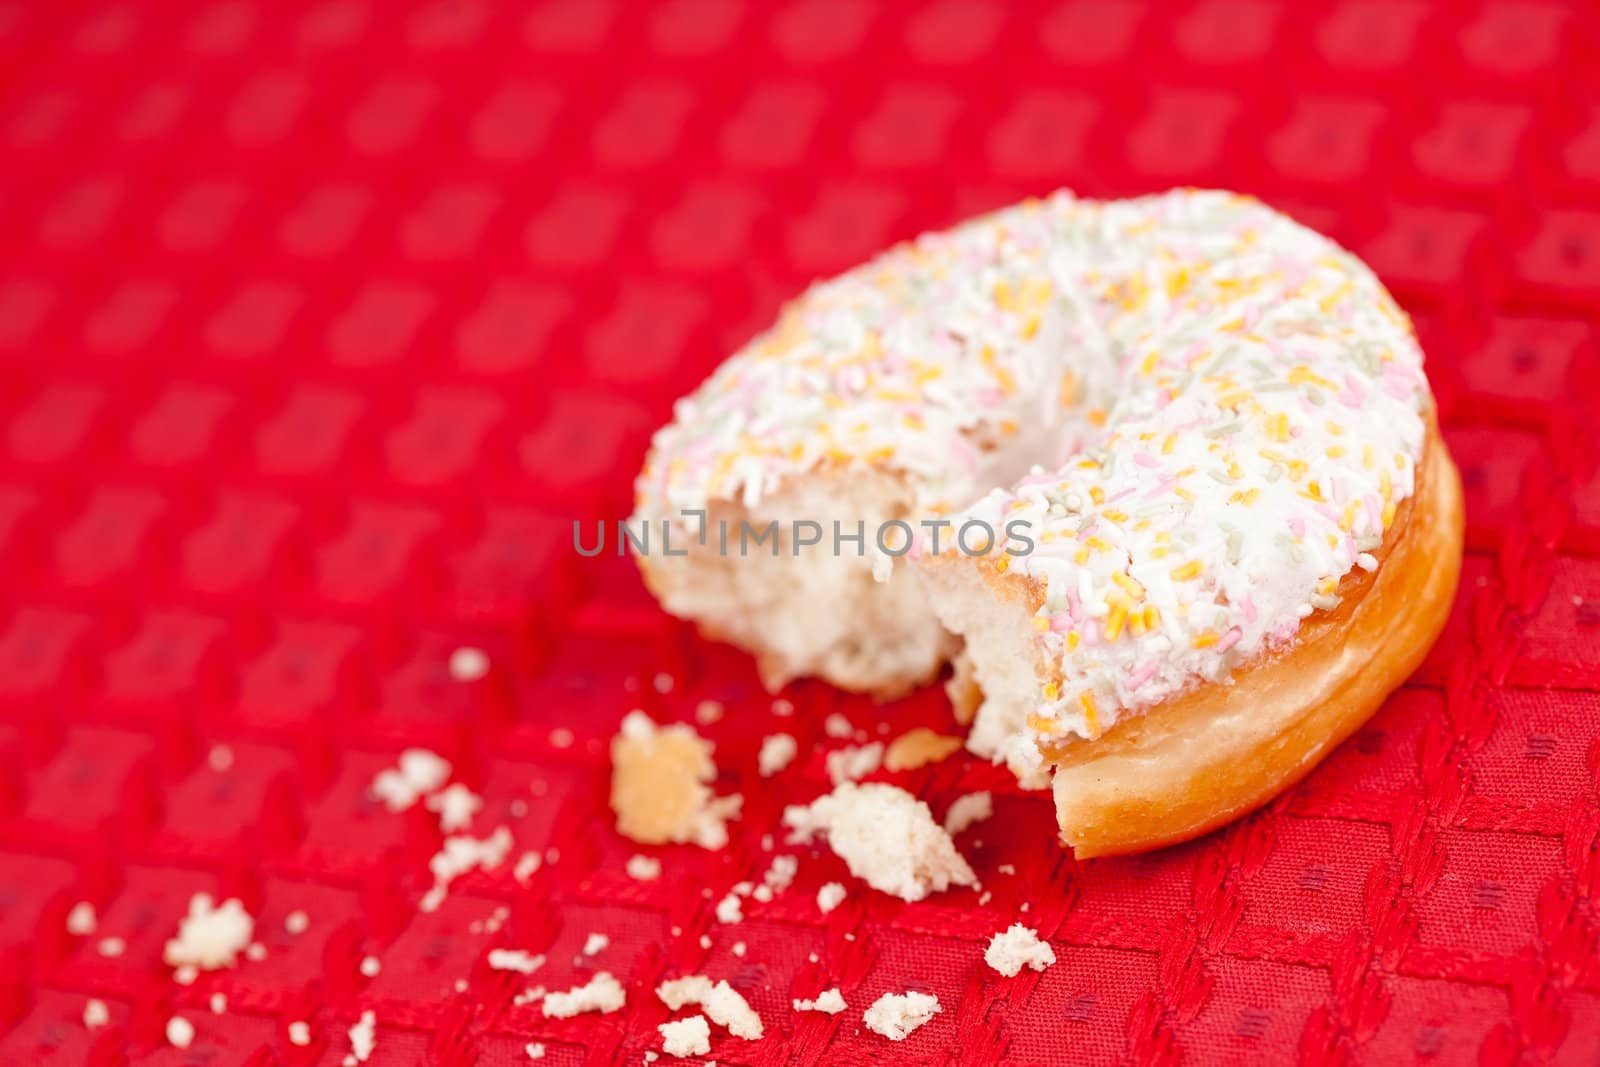 Half eaten doughnut on a red tablecloth by Wavebreakmedia